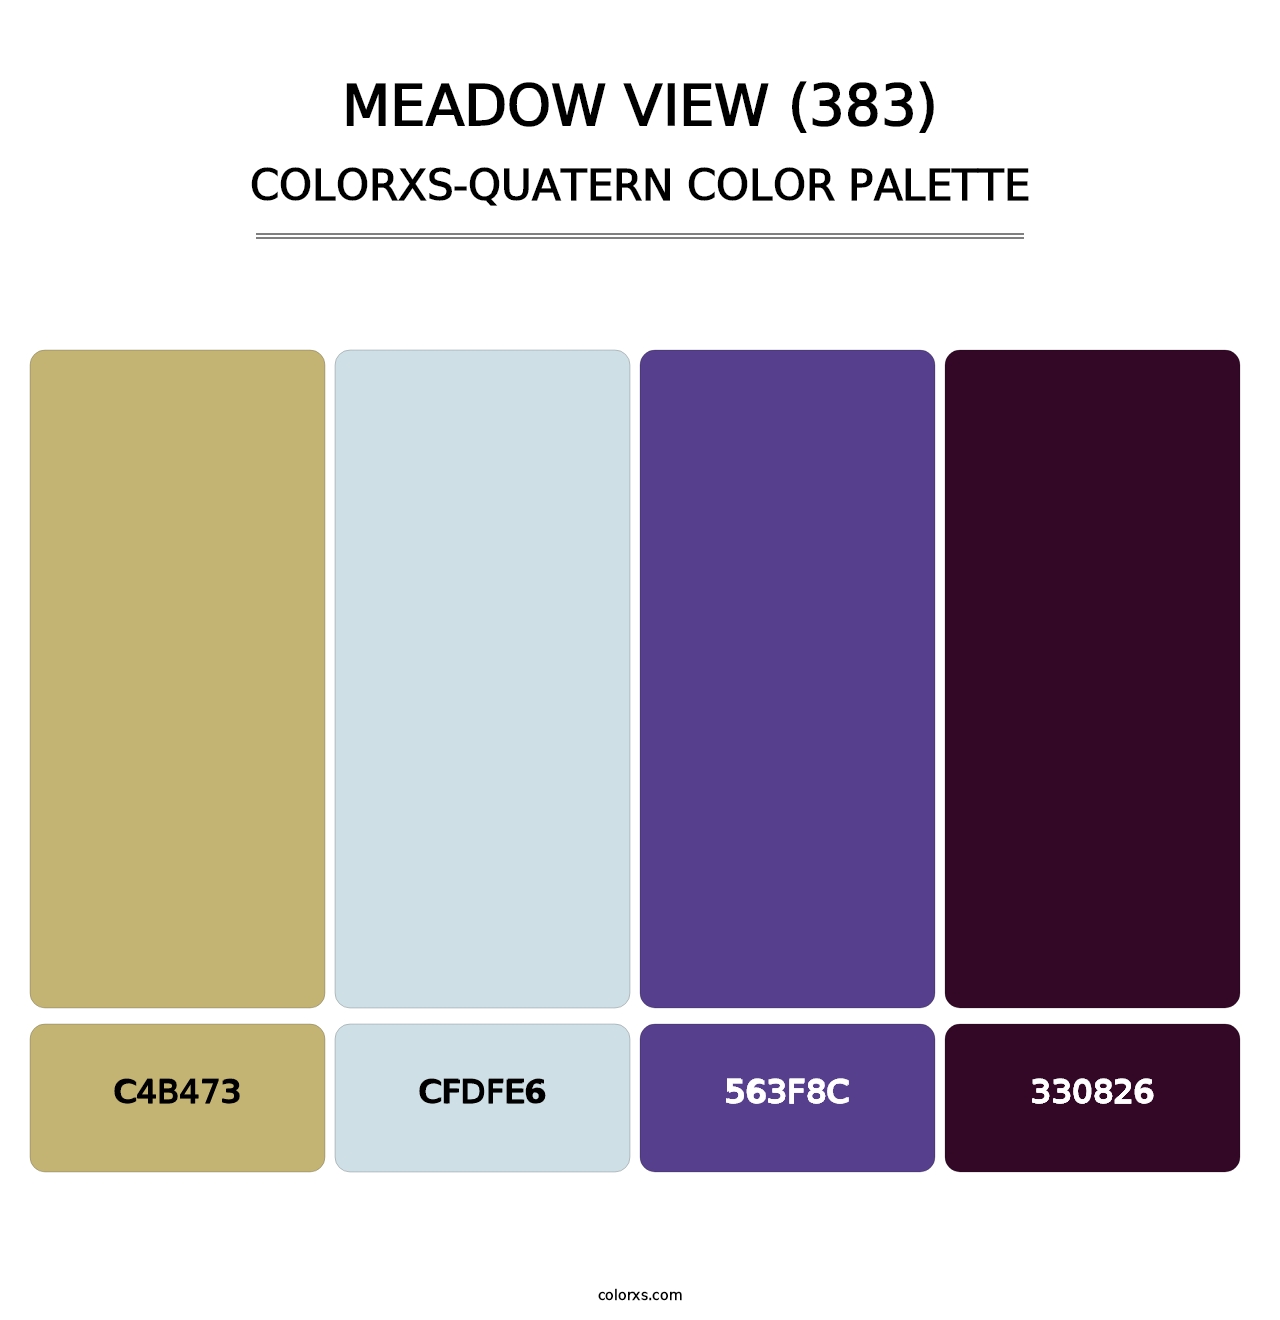 Meadow View (383) - Colorxs Quatern Palette